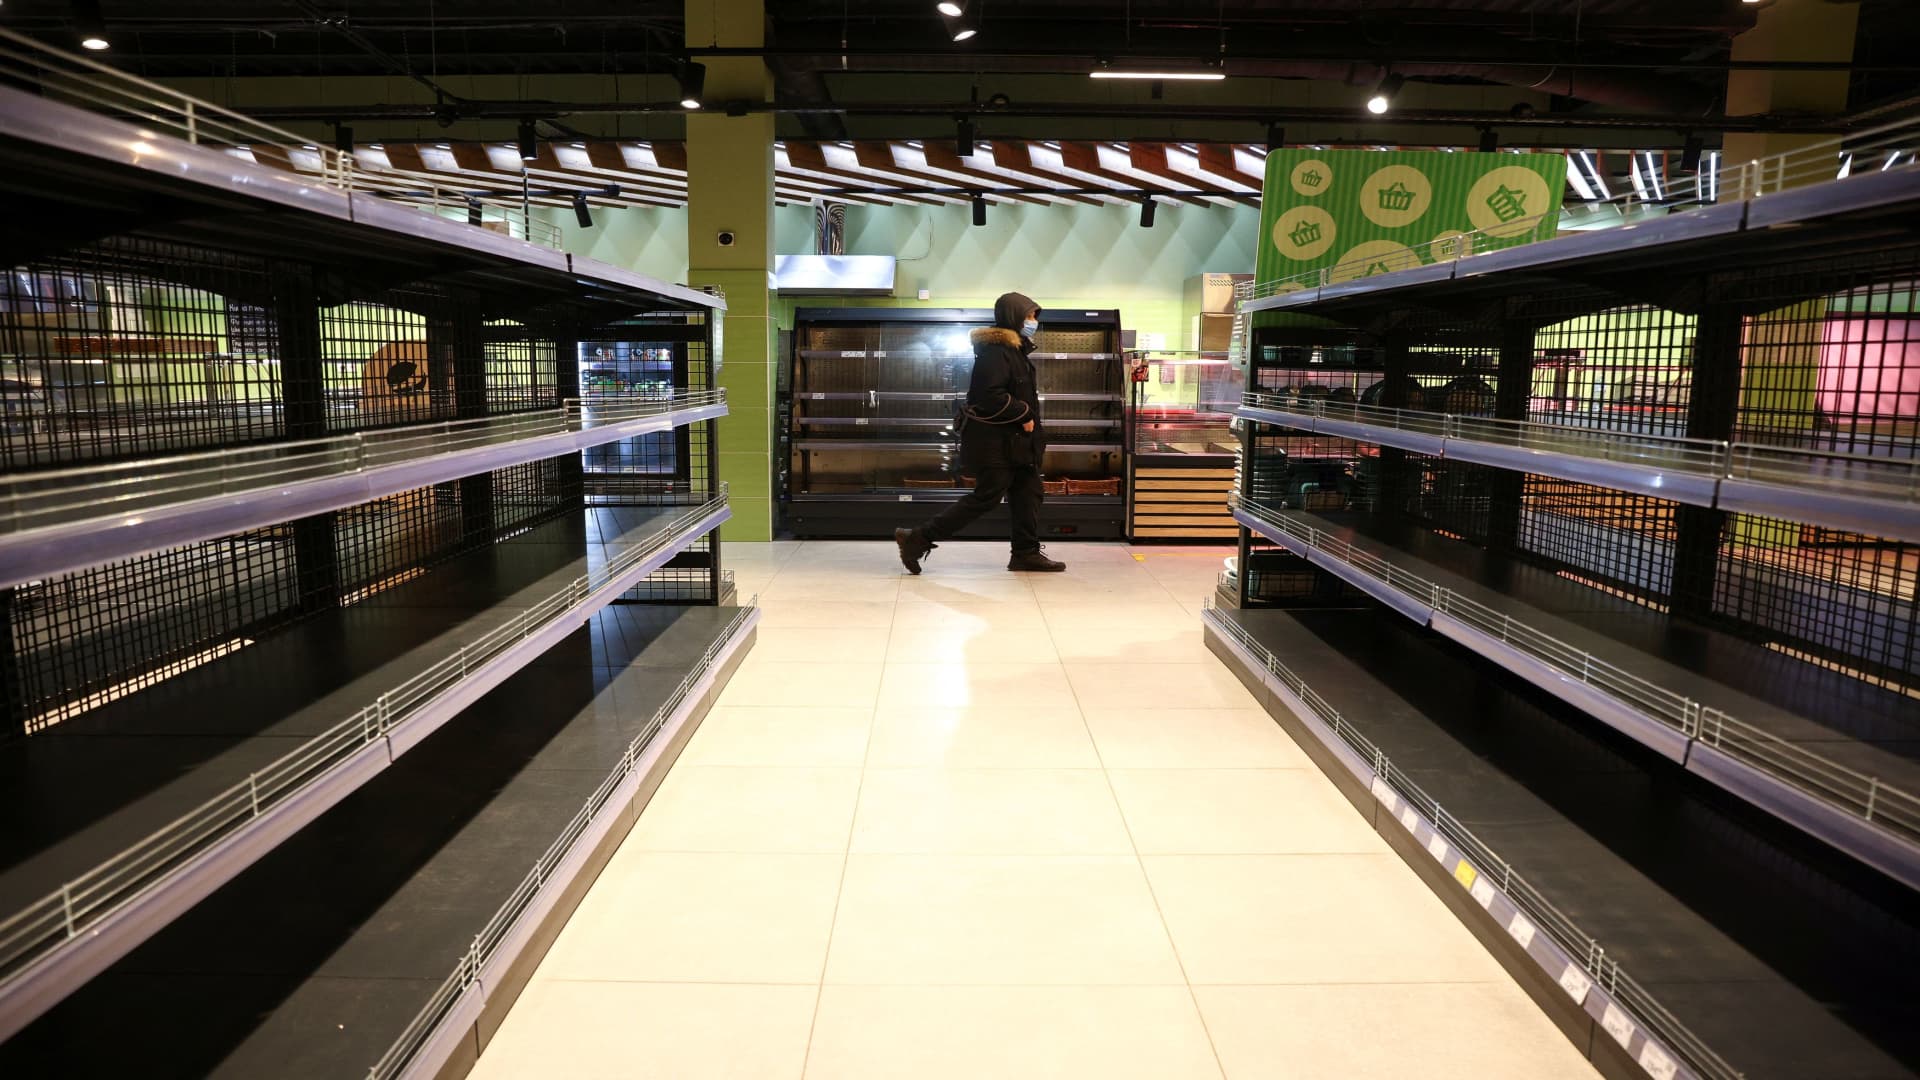 Shelves in a supermarket stand empty, following Russia's invasion of Ukraine, in Skvyra near Kyiv, Ukraine, March 4, 2022. 